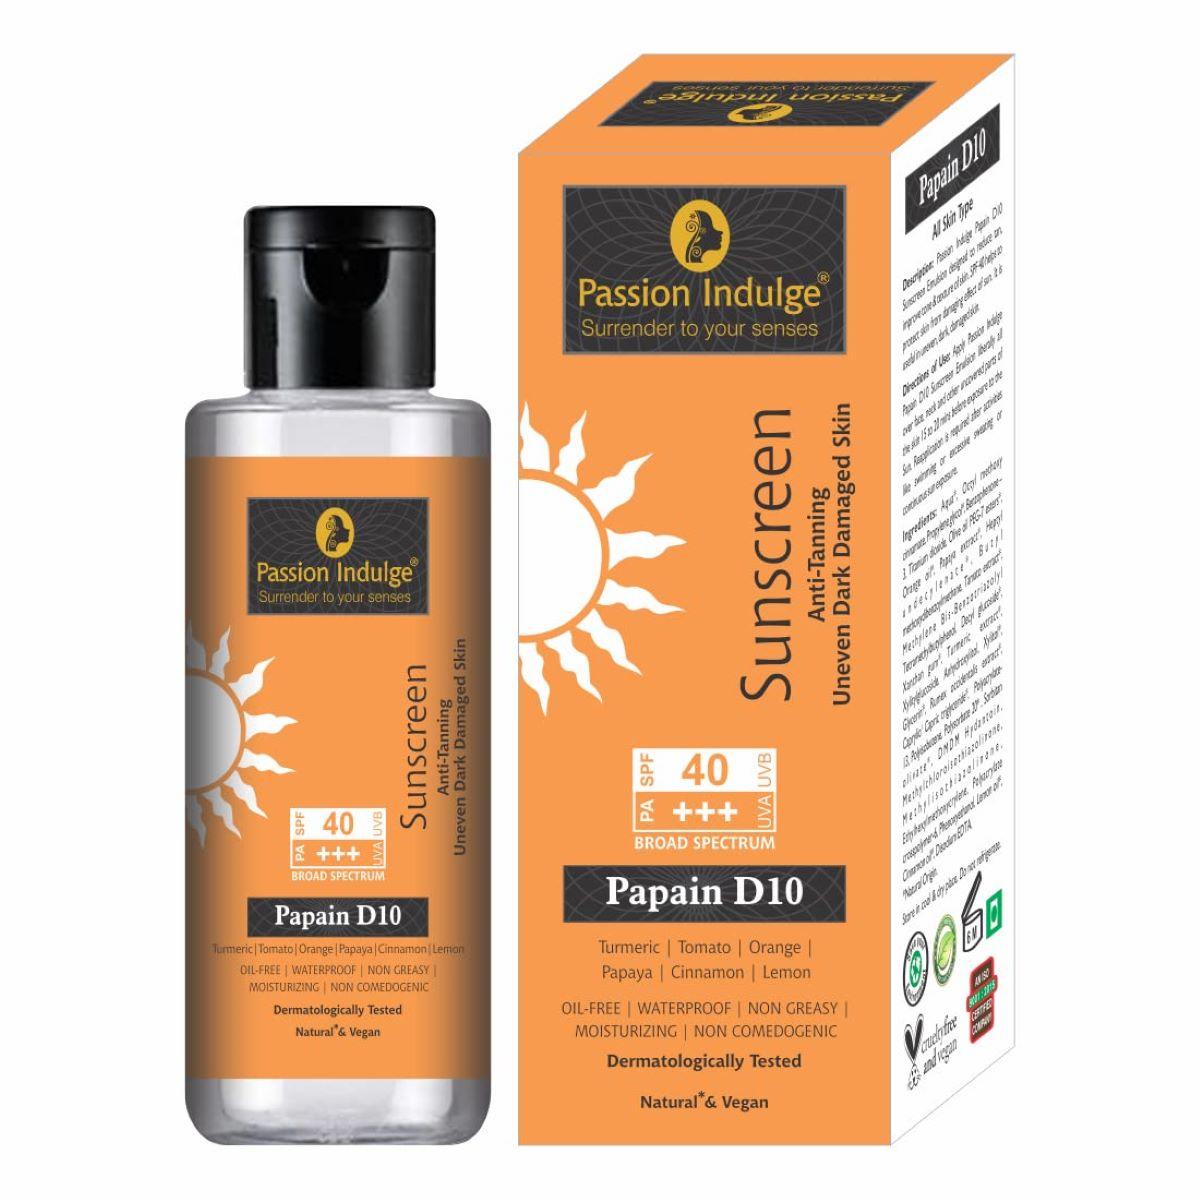 Papain D10 Natural Sunscreen 100ml | Anti-Tanning | Uneven Dark Damaged skin | SPF 40 | Oil free | Water Proof | Moisturizing | Dermatologically Tested | Ayurvedic & Vegan for All Skin Types - passionindulge